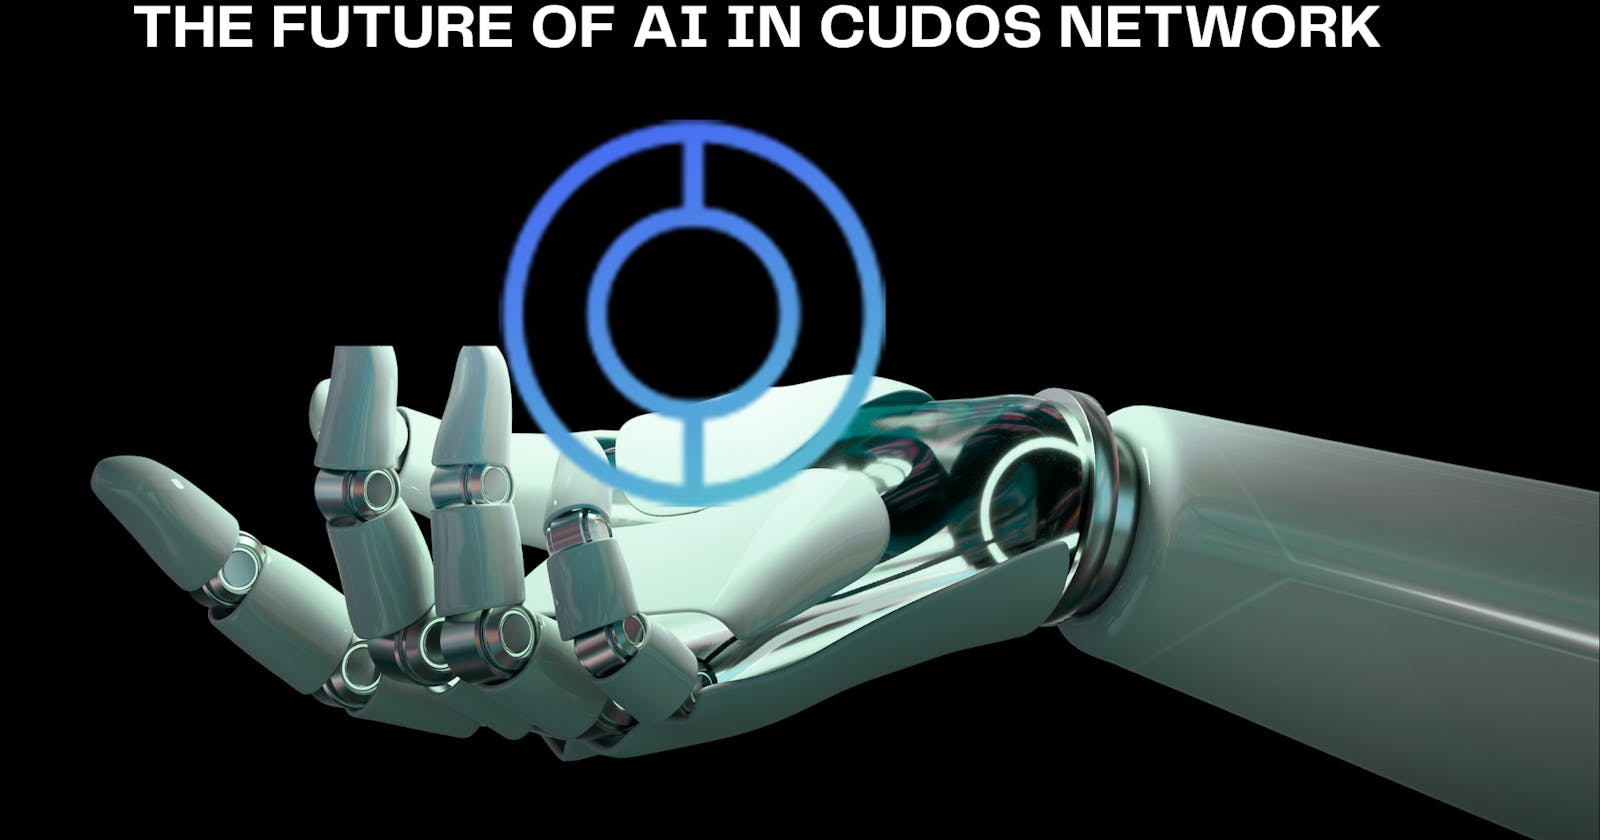 The Future of AI in CUDOS Network